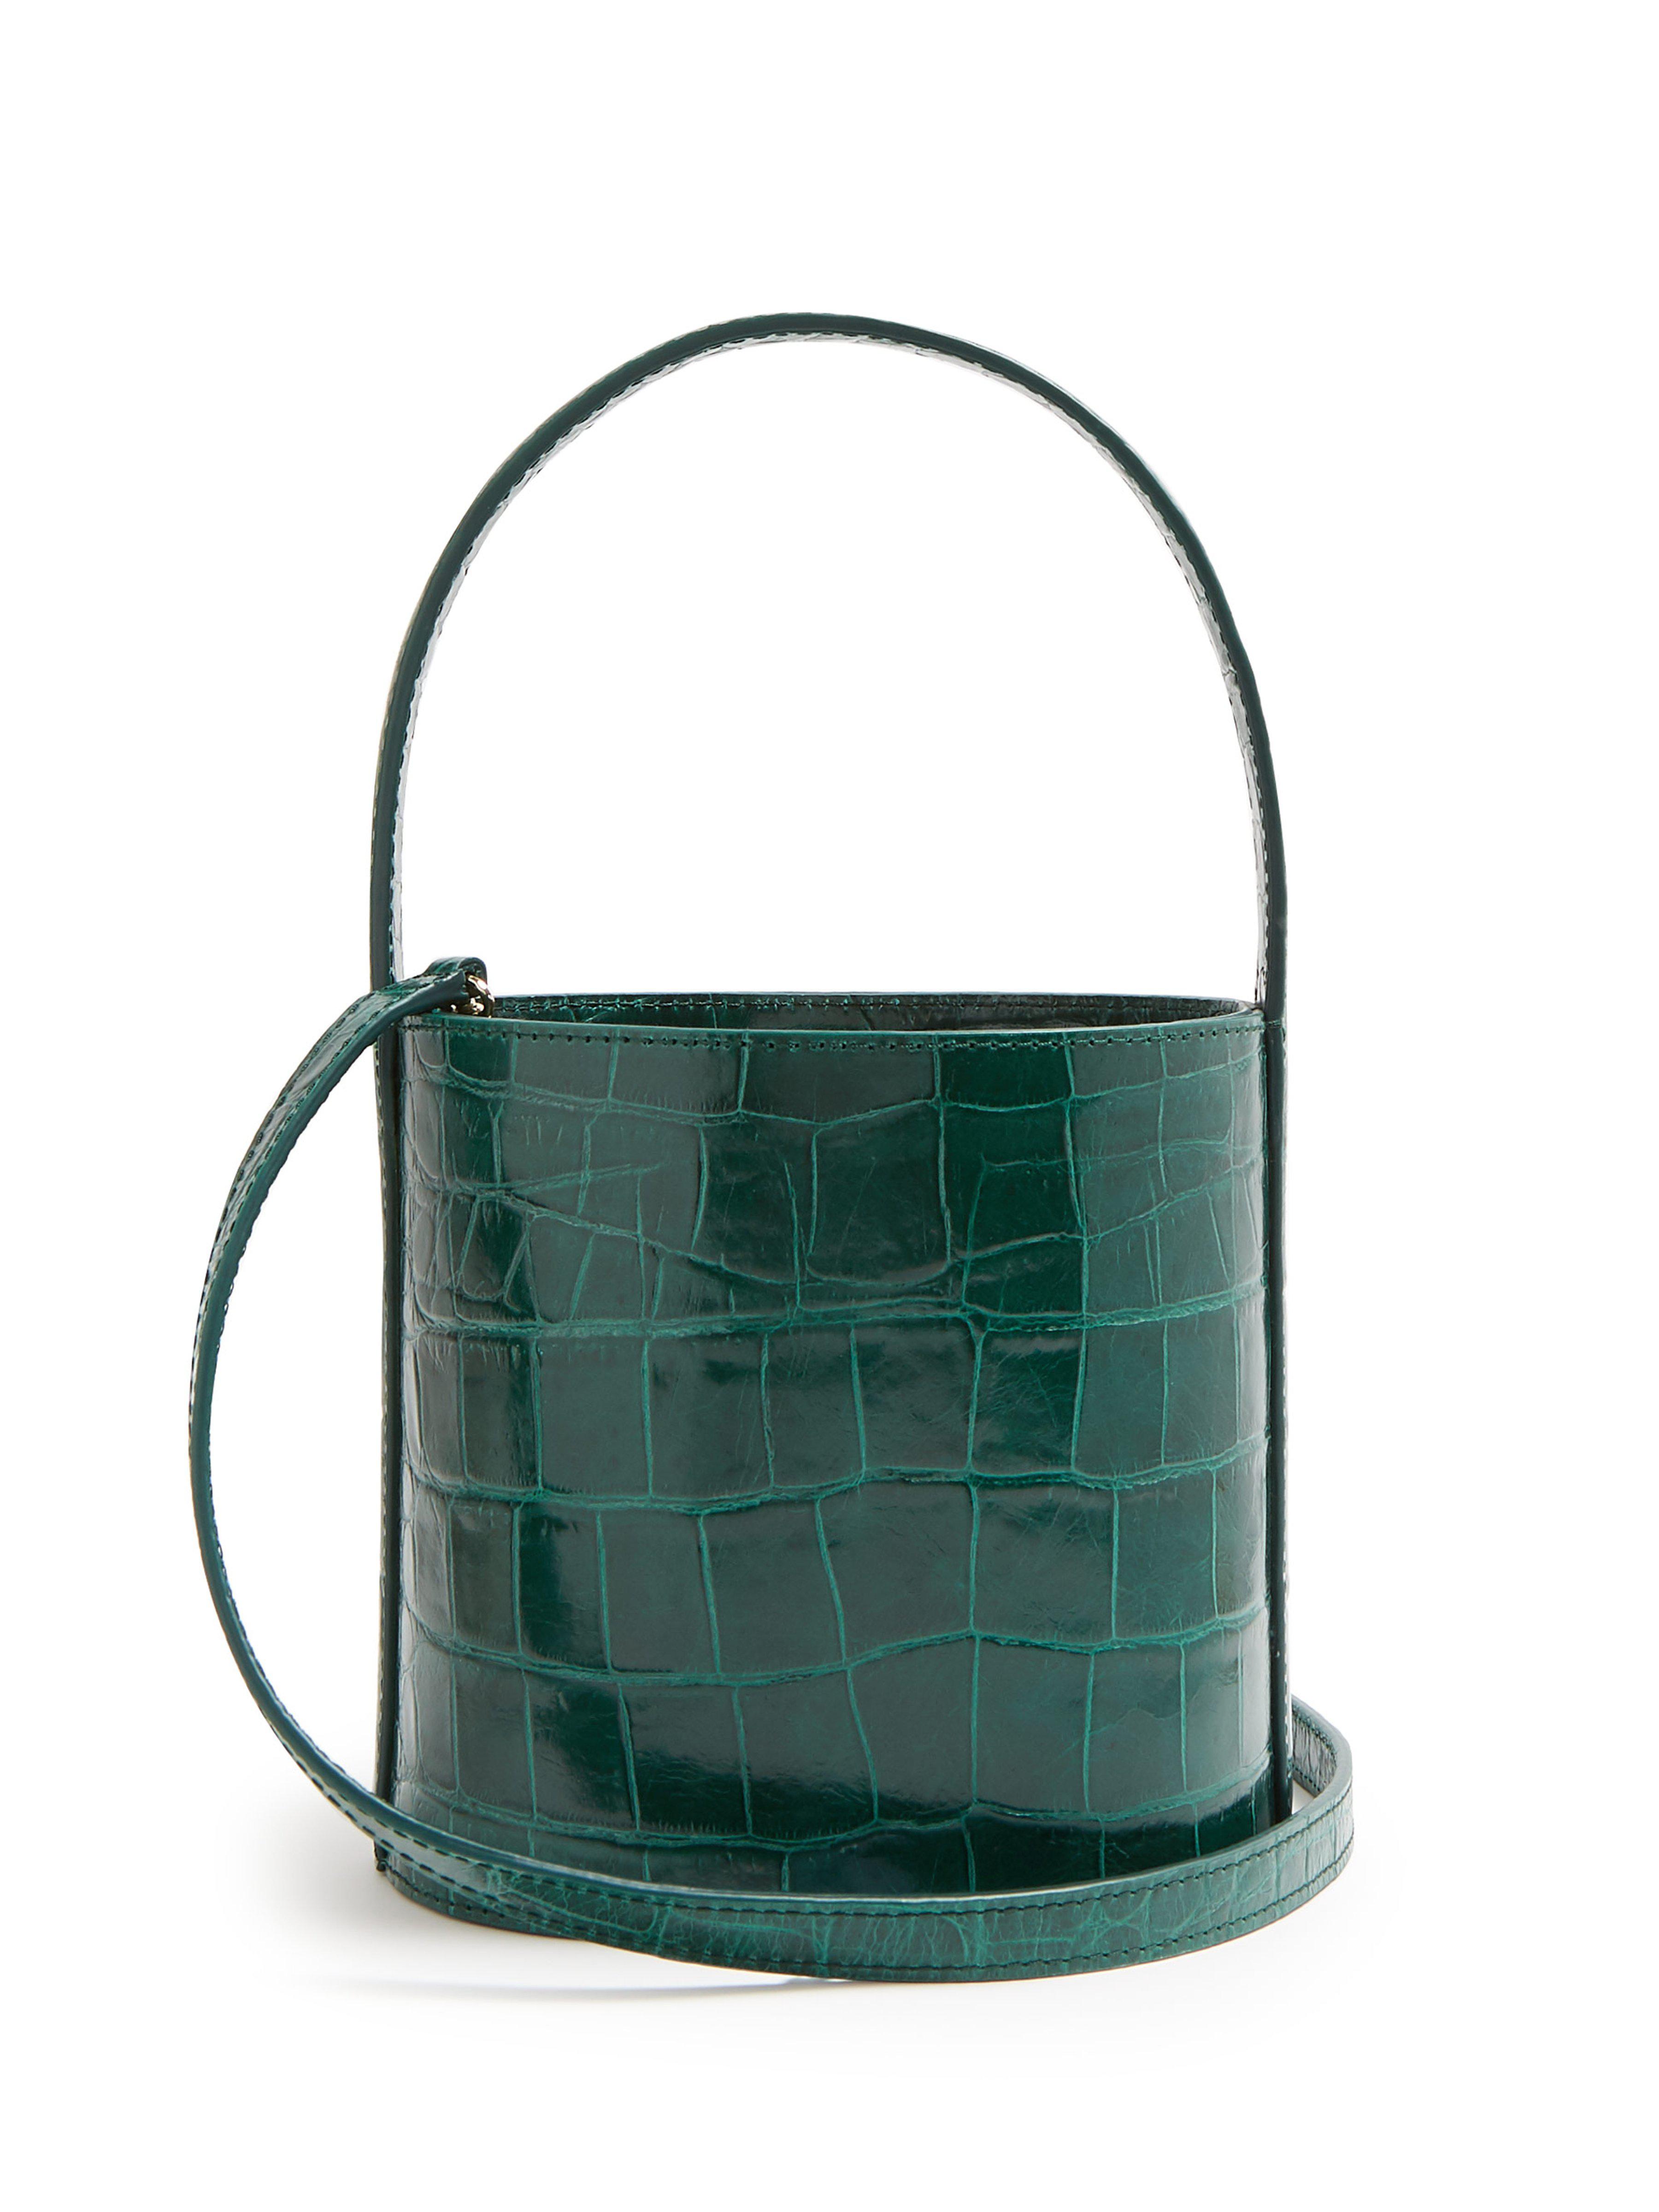 STAUD Bissett Crocodile Effect Leather Bucket Bag in Green - Lyst